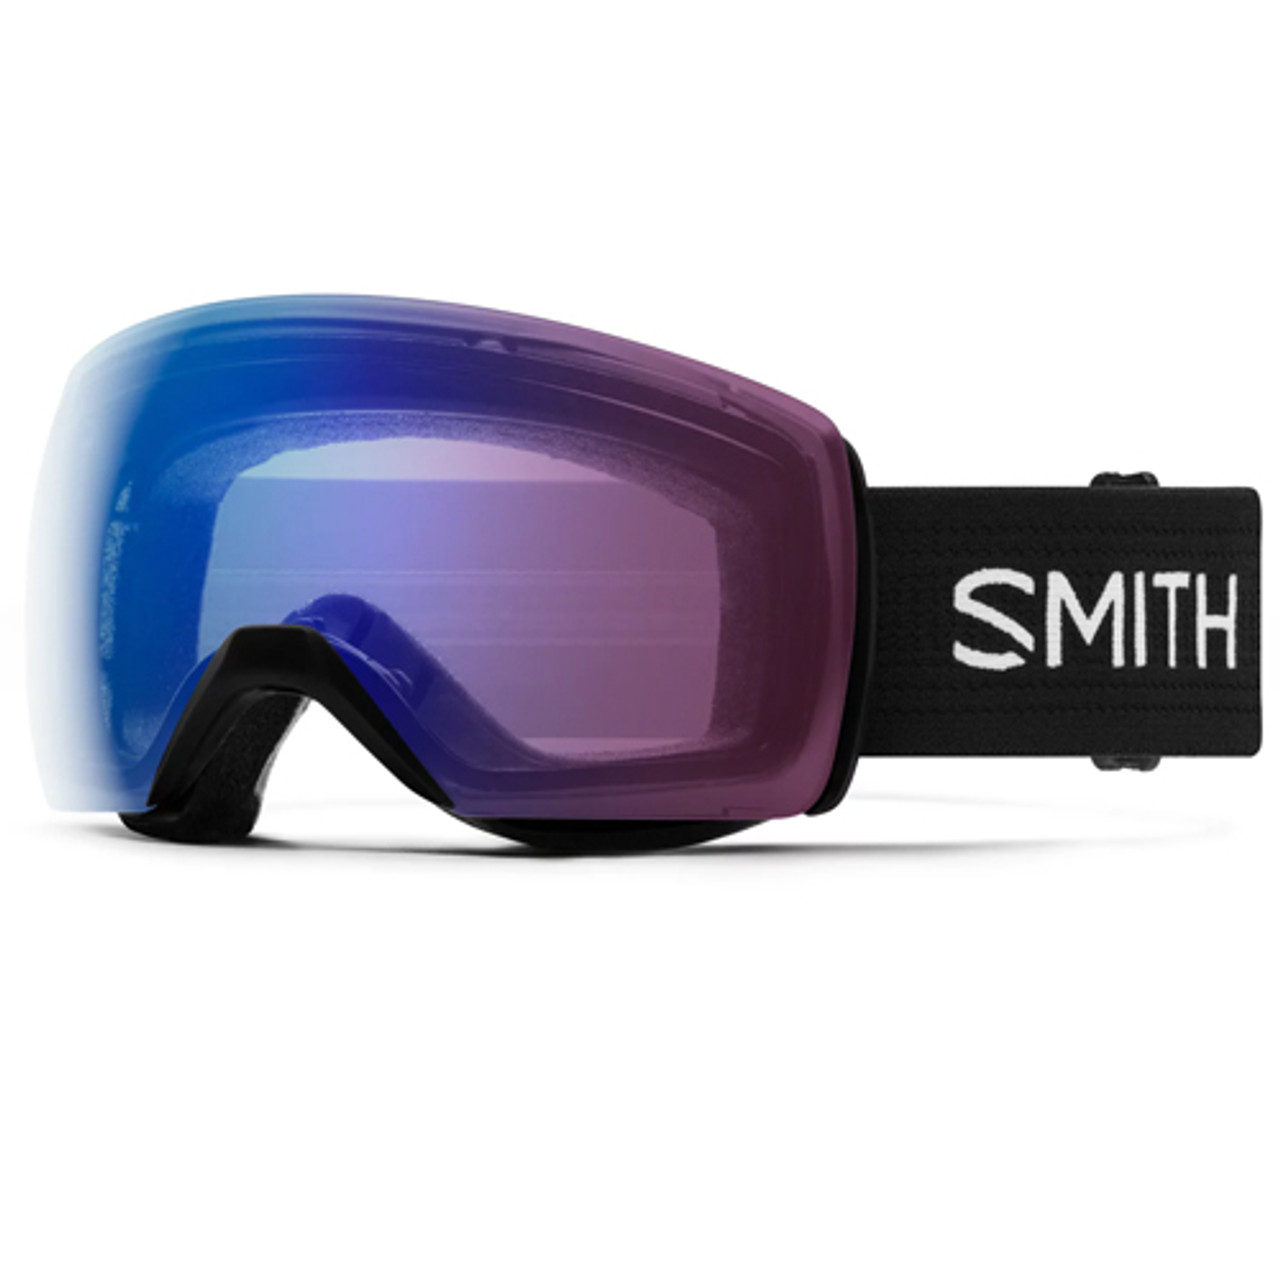 Lens for the Smith Skyline XL Ski Goggles